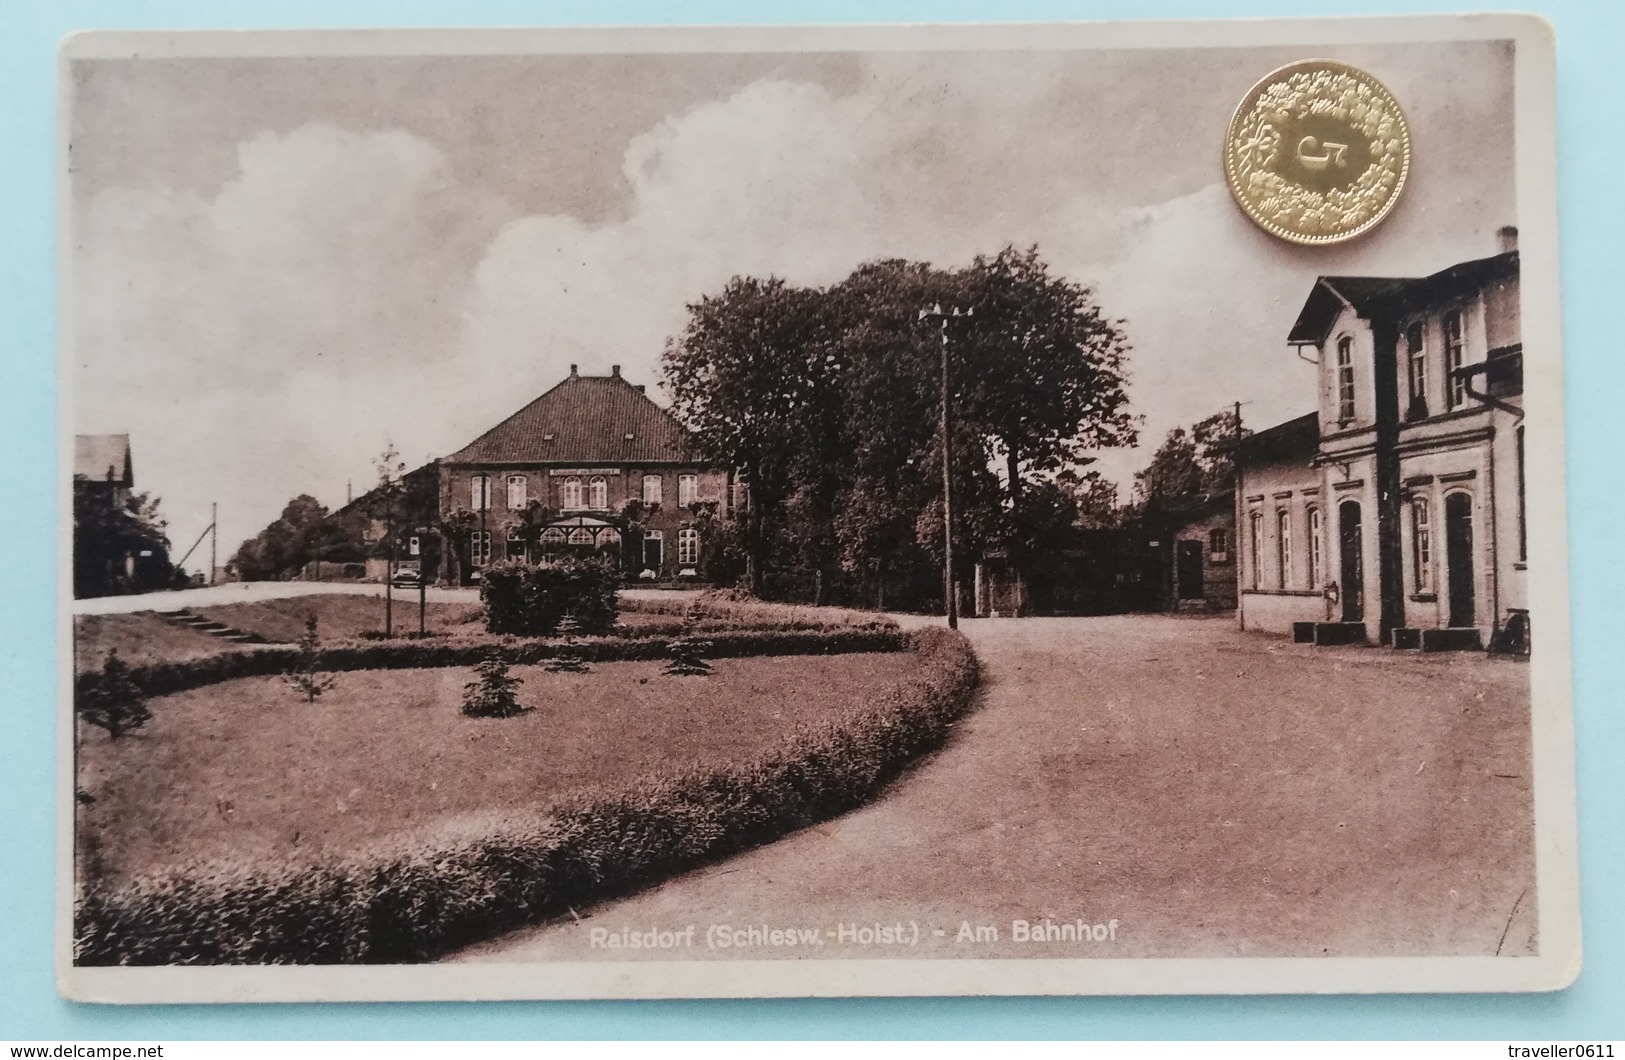 Raisdorf, Holstein, Am Bahnhof, 1920 - Preetz